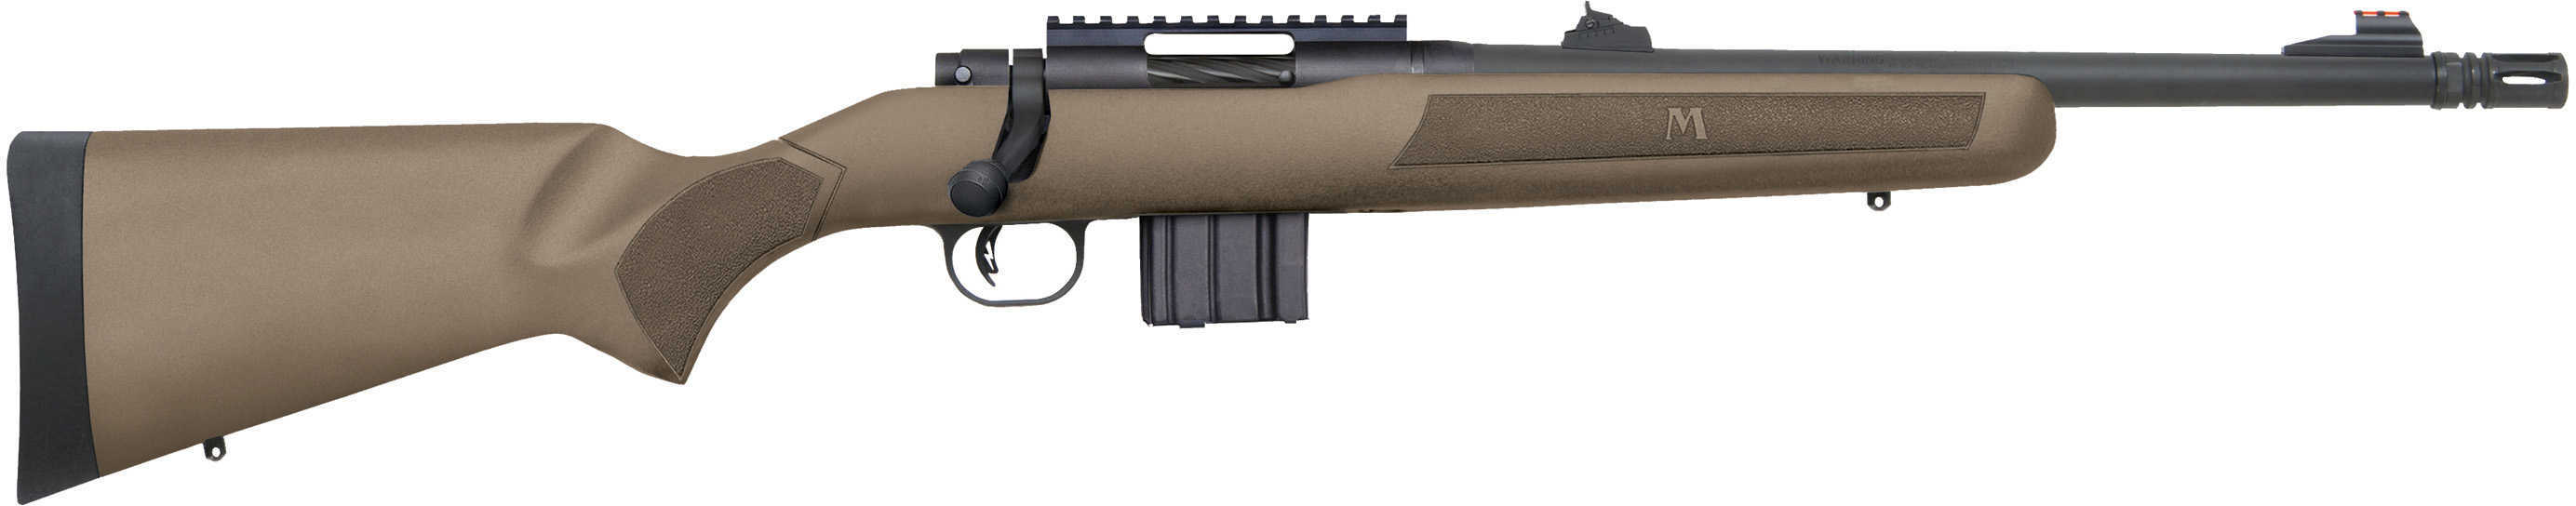 Mossberg MVP Patrol 223 Remington /5.56mm NATO 16.3" Threaded Barrel 10+1 Round Mag Tan Synthetic Stock Blued Bolt Action Rifle 27709